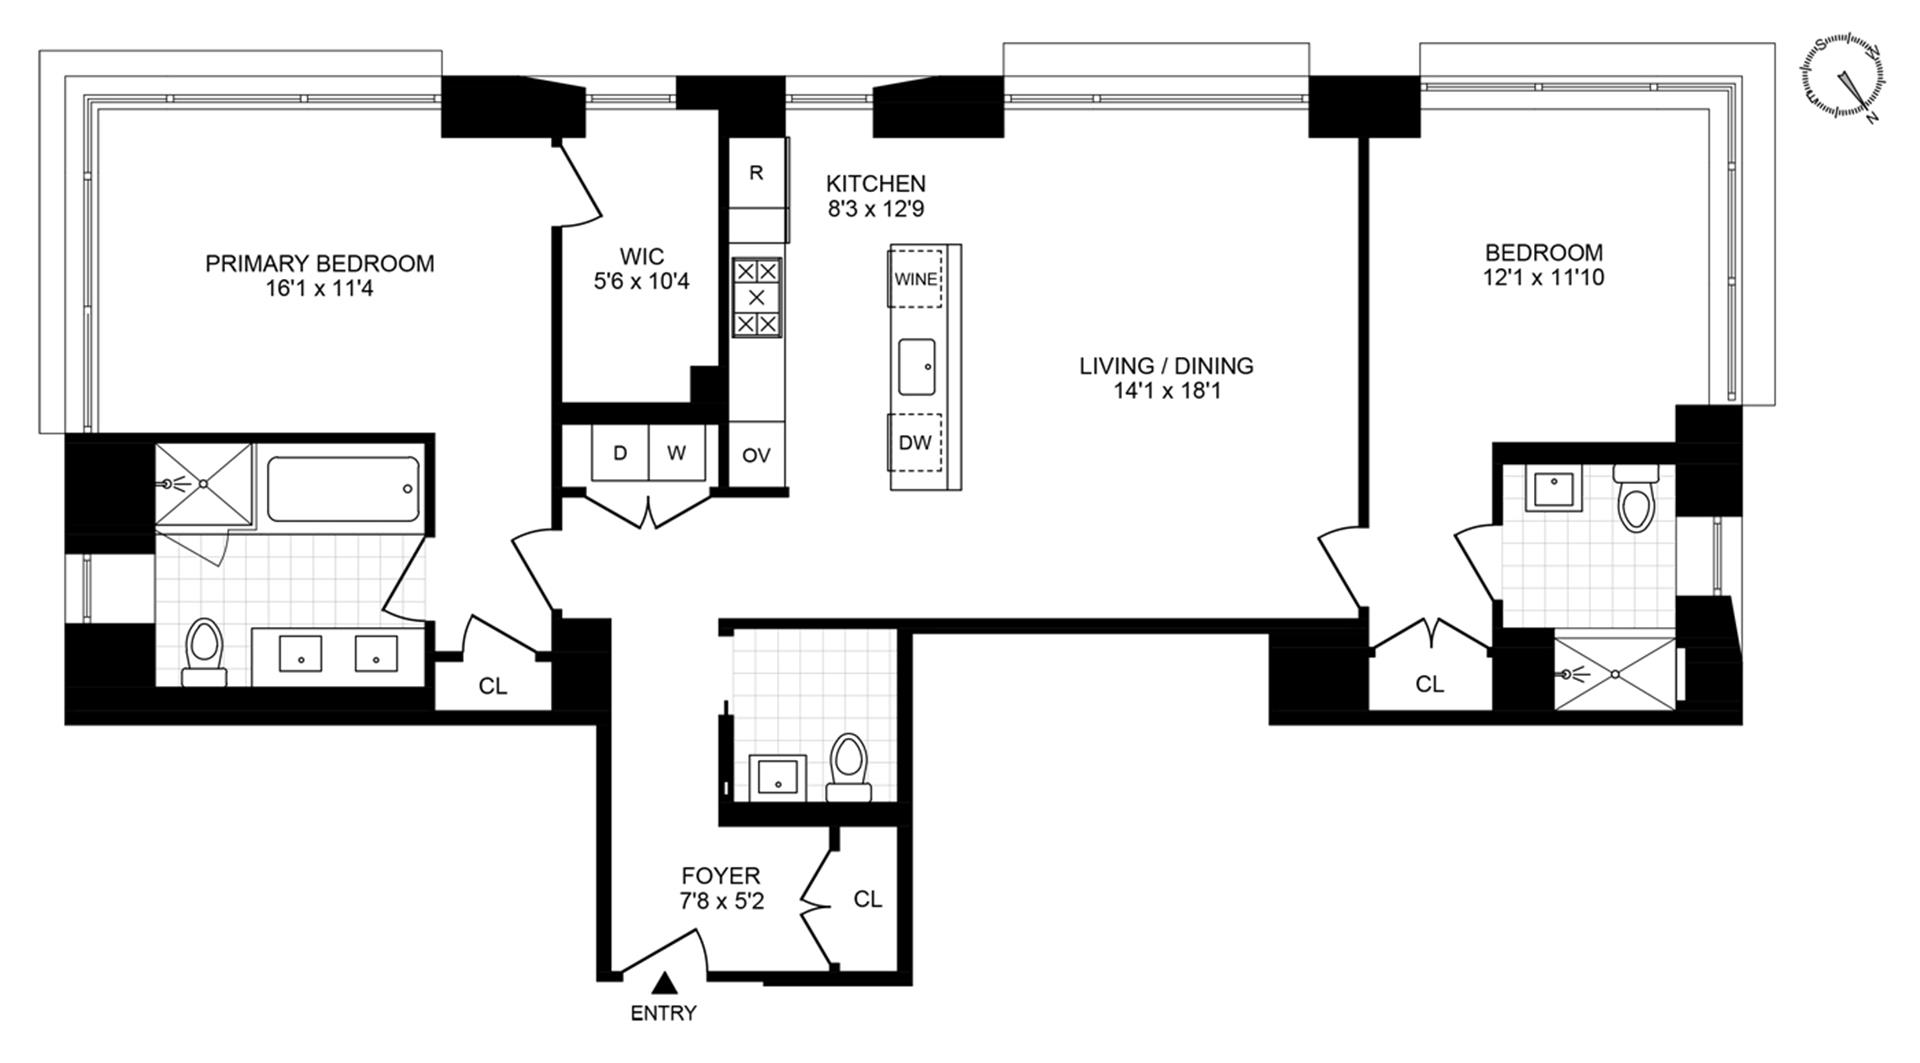 Floorplan for 301 East 50th Street, 8A